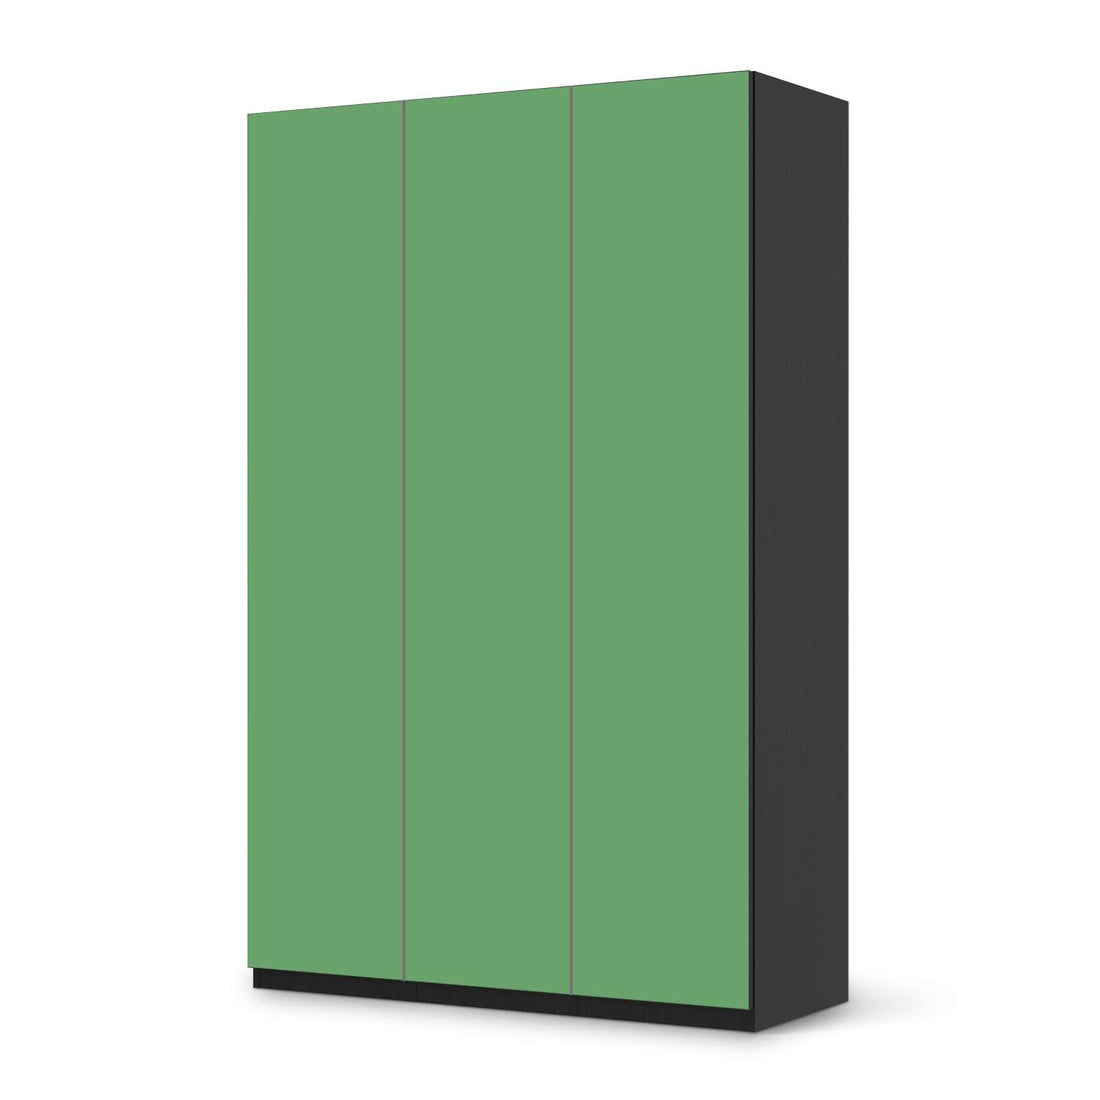 Selbstklebende Folie Grün Light - IKEA Pax Schrank 236 cm Höhe - 3 Türen - schwarz